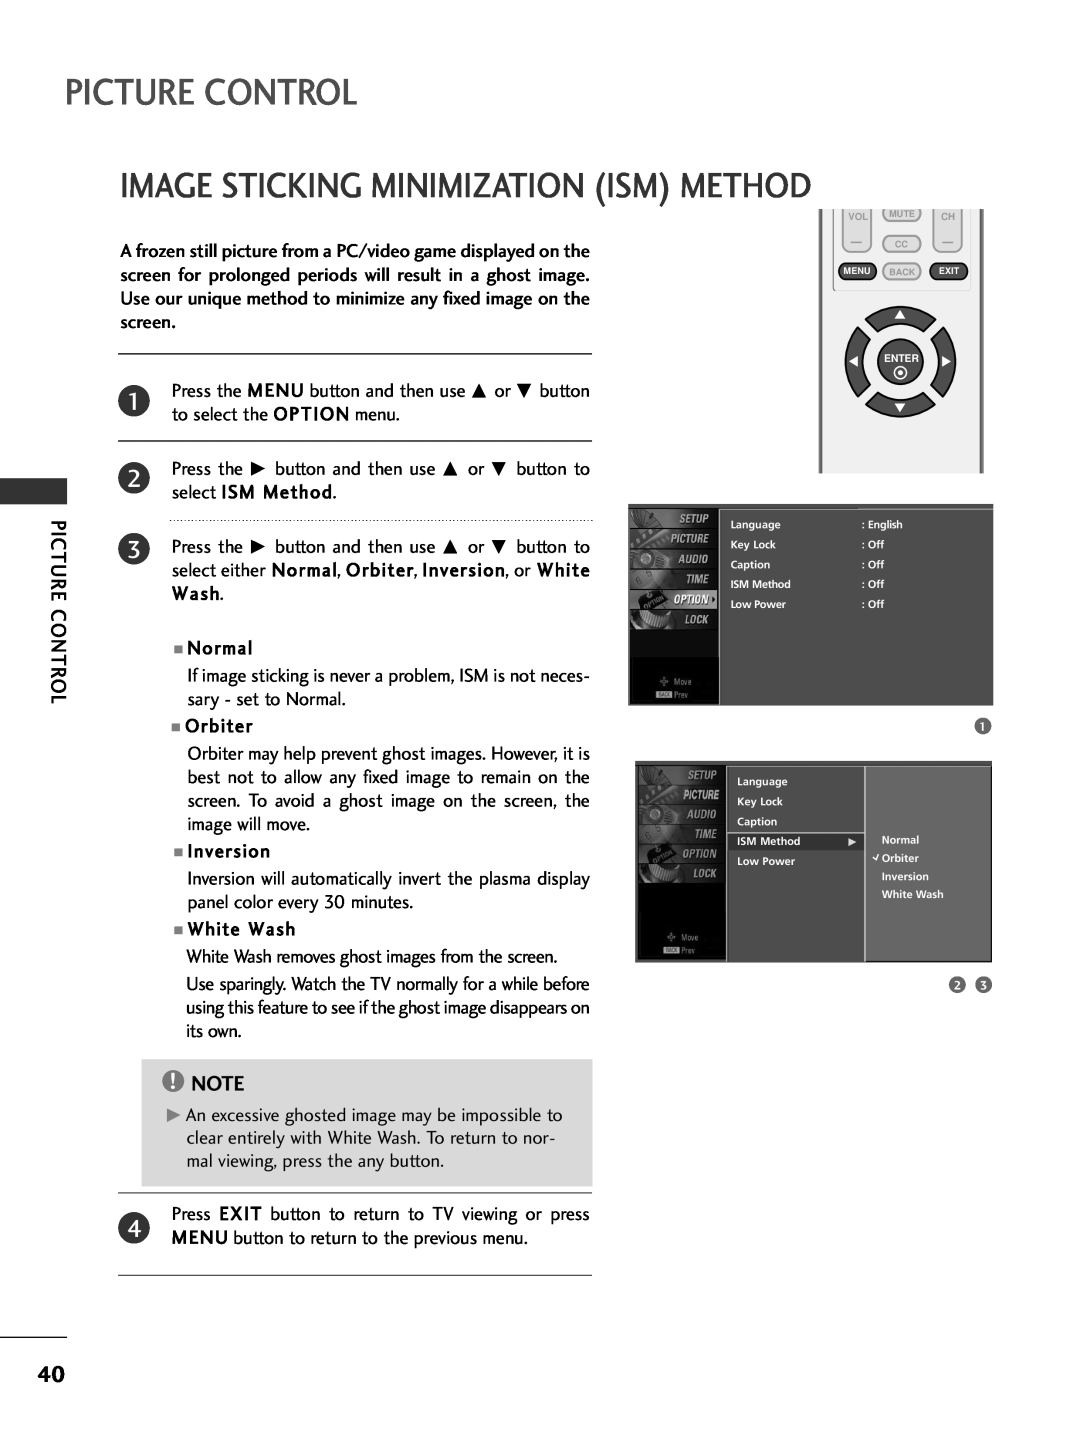 LG Electronics 32PC5DVC owner manual Image Sticking Minimization Ism Method, Picture Control 